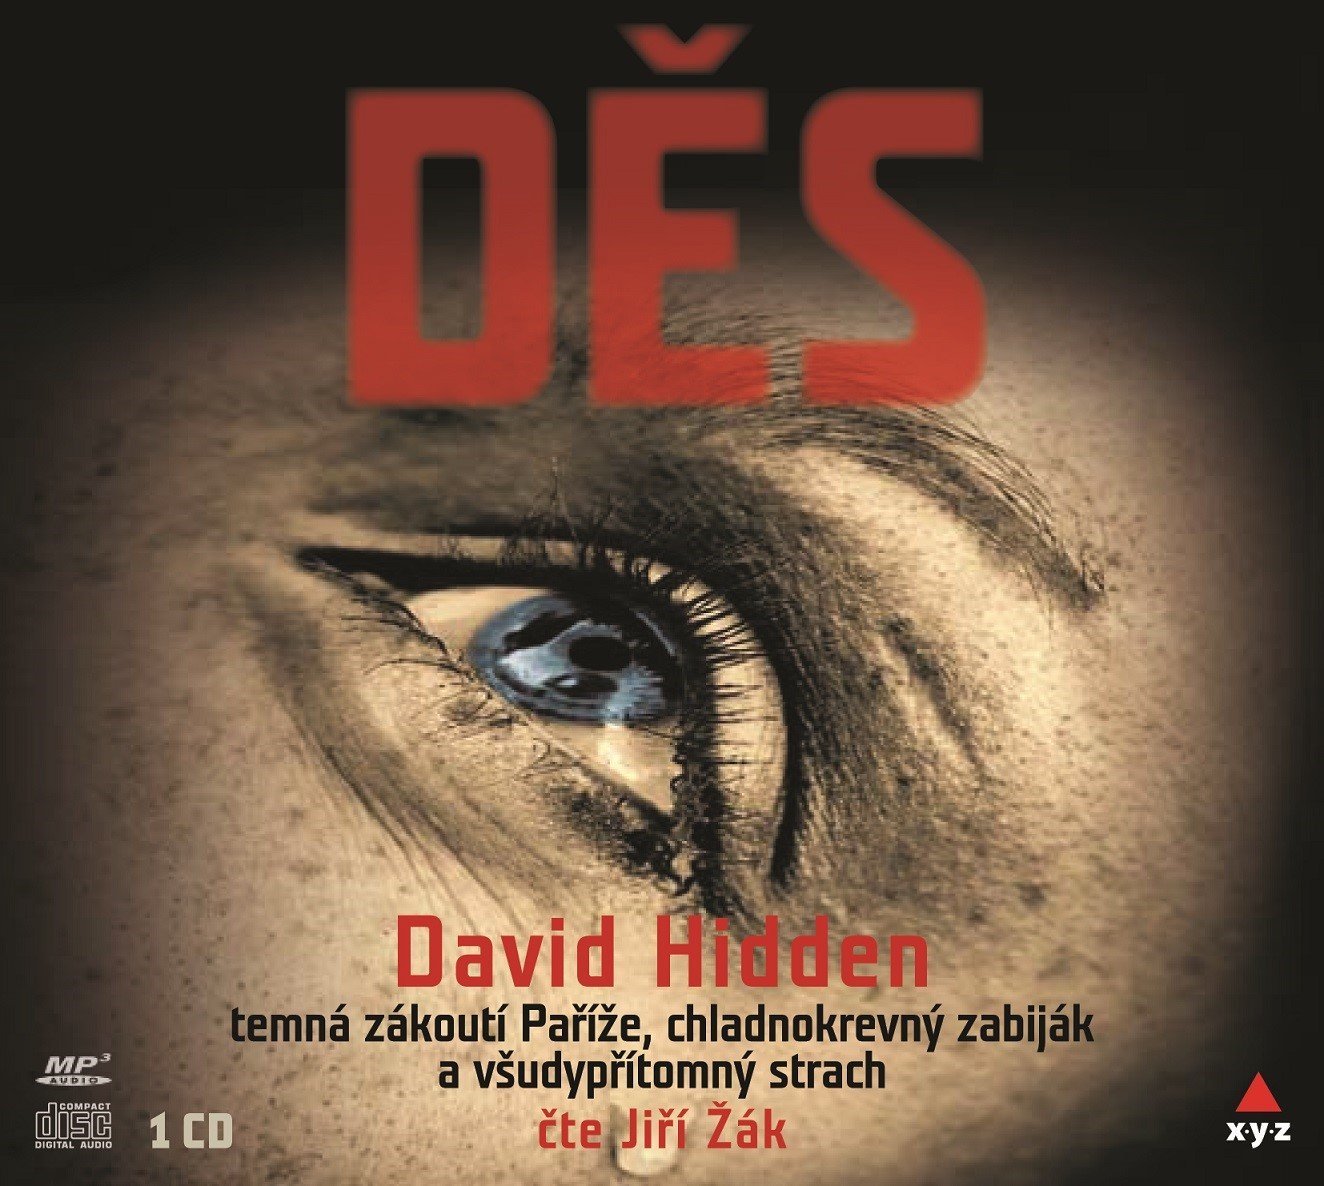 Děs - CDmp3 (Čte Jiří Žák) - David Hidden